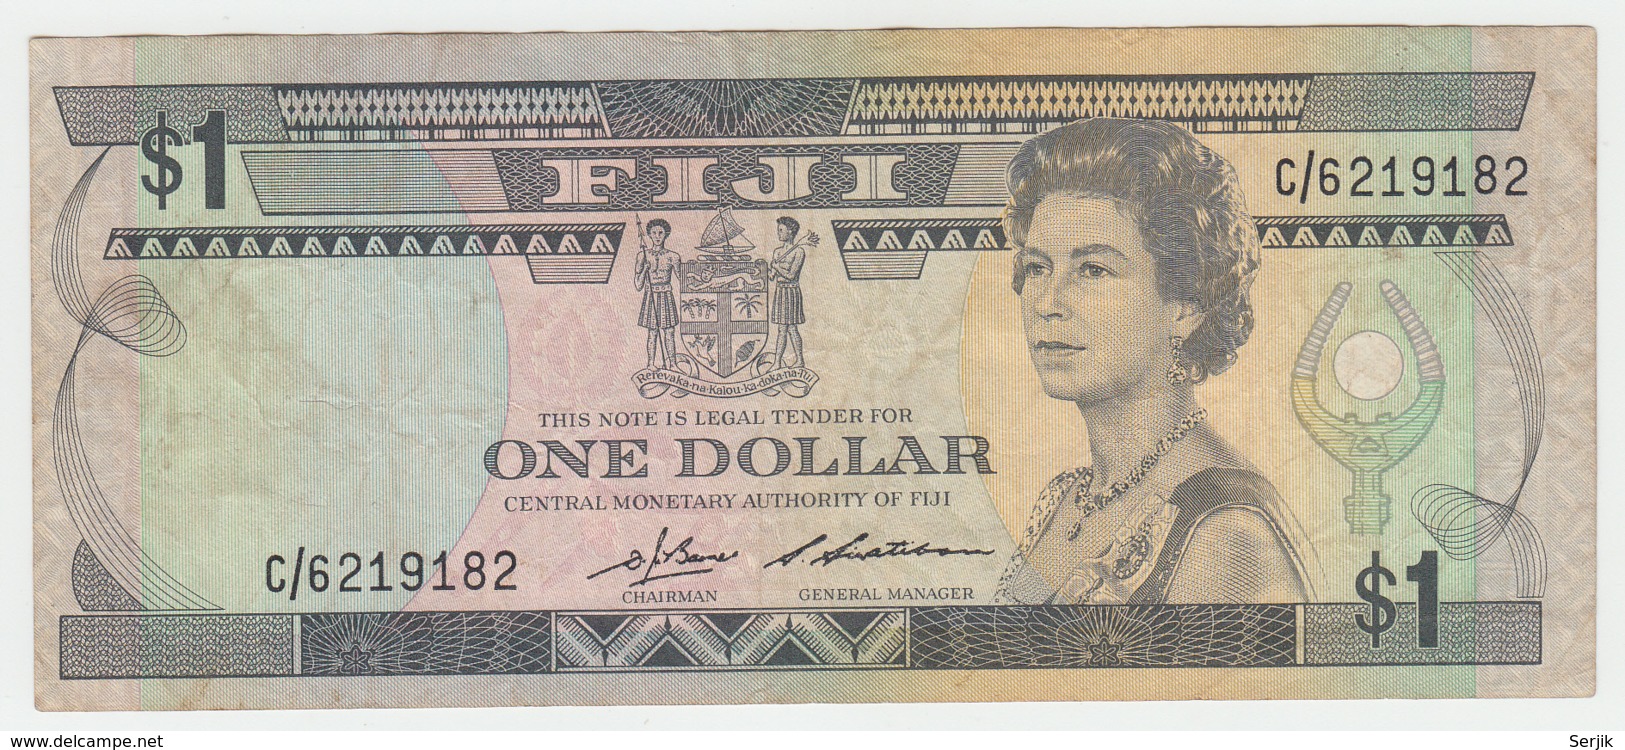 FIJI 1 DOLLAR 1983 VF Pick 81 - Fiji